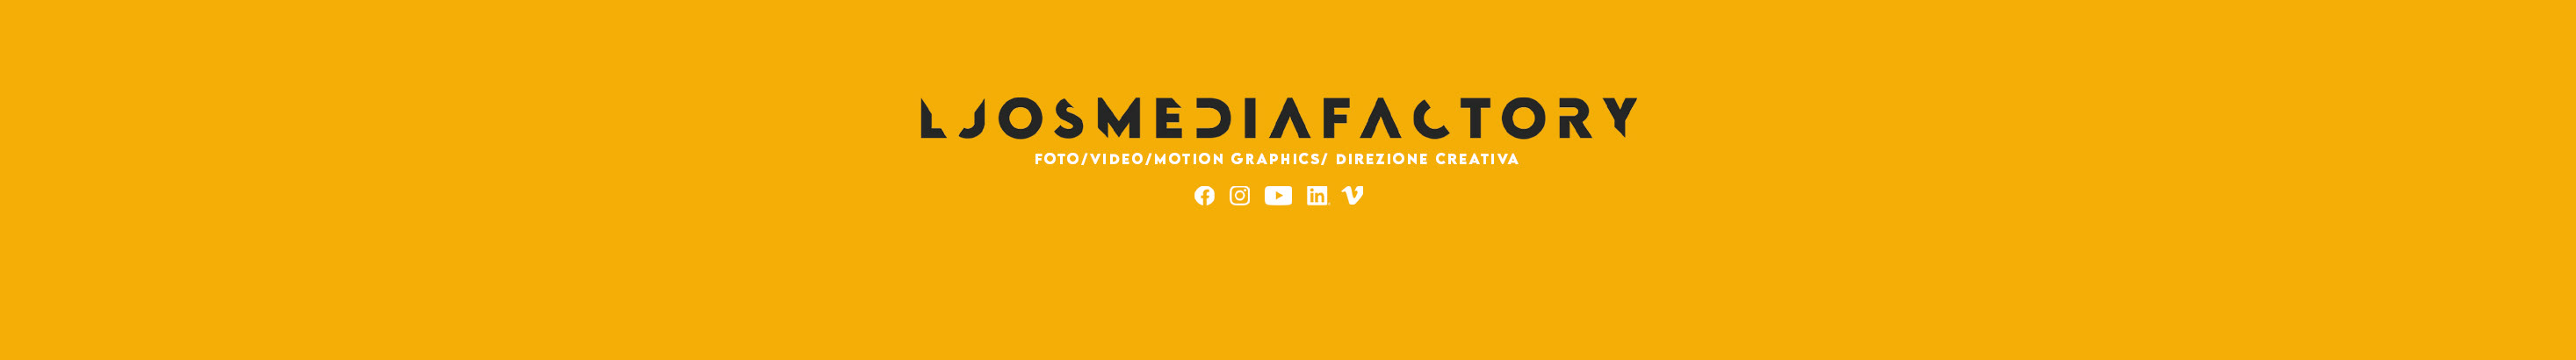 Ljos Media Factory's profile banner